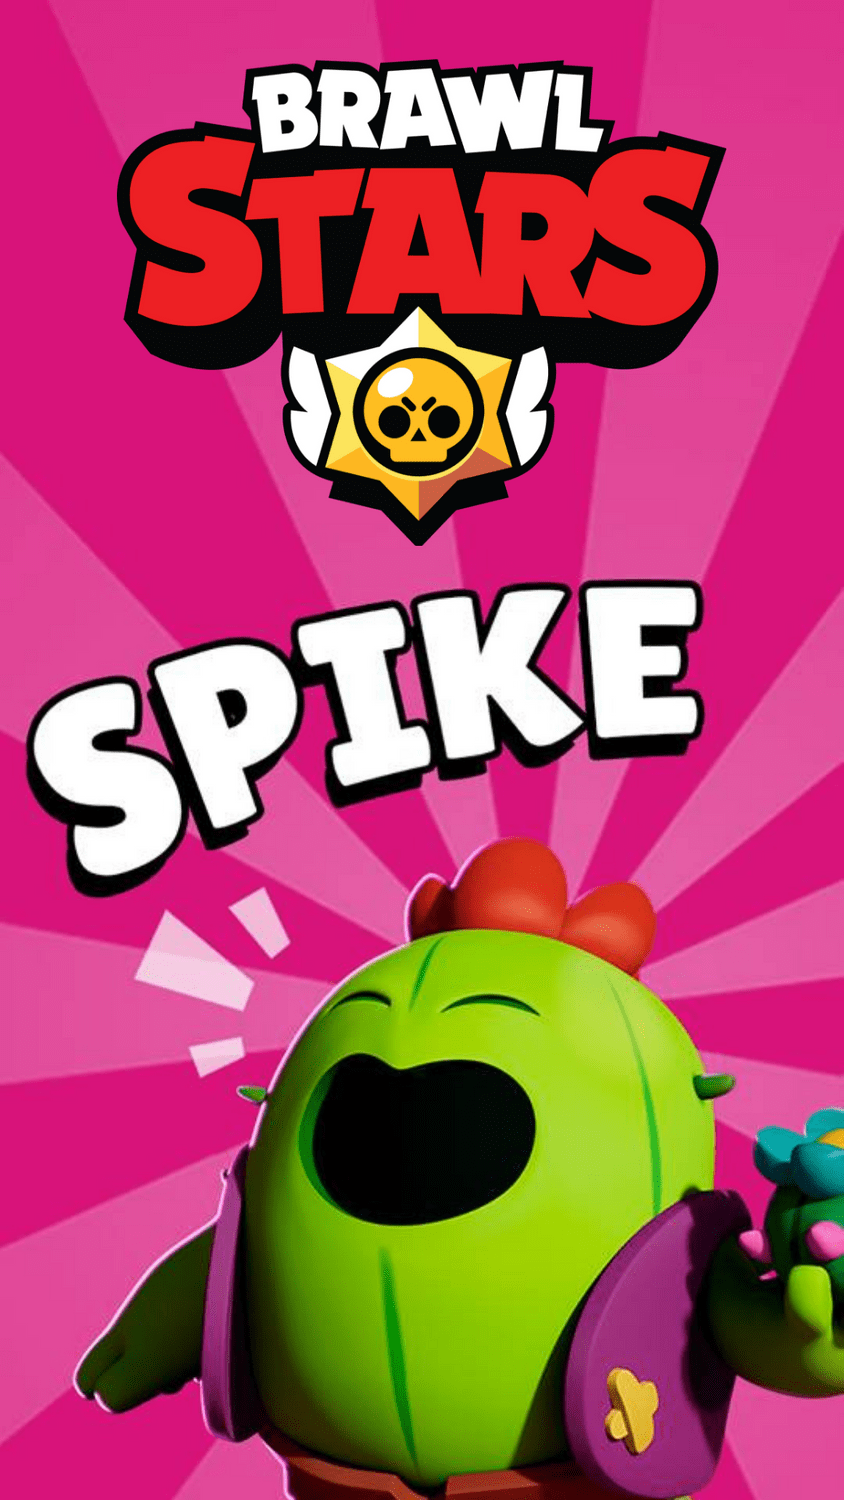 Spike Brawl Stars Wallpapers Top Free Spike Brawl Stars Backgrounds Wallpaperaccess - brawl stars phone wallpaper